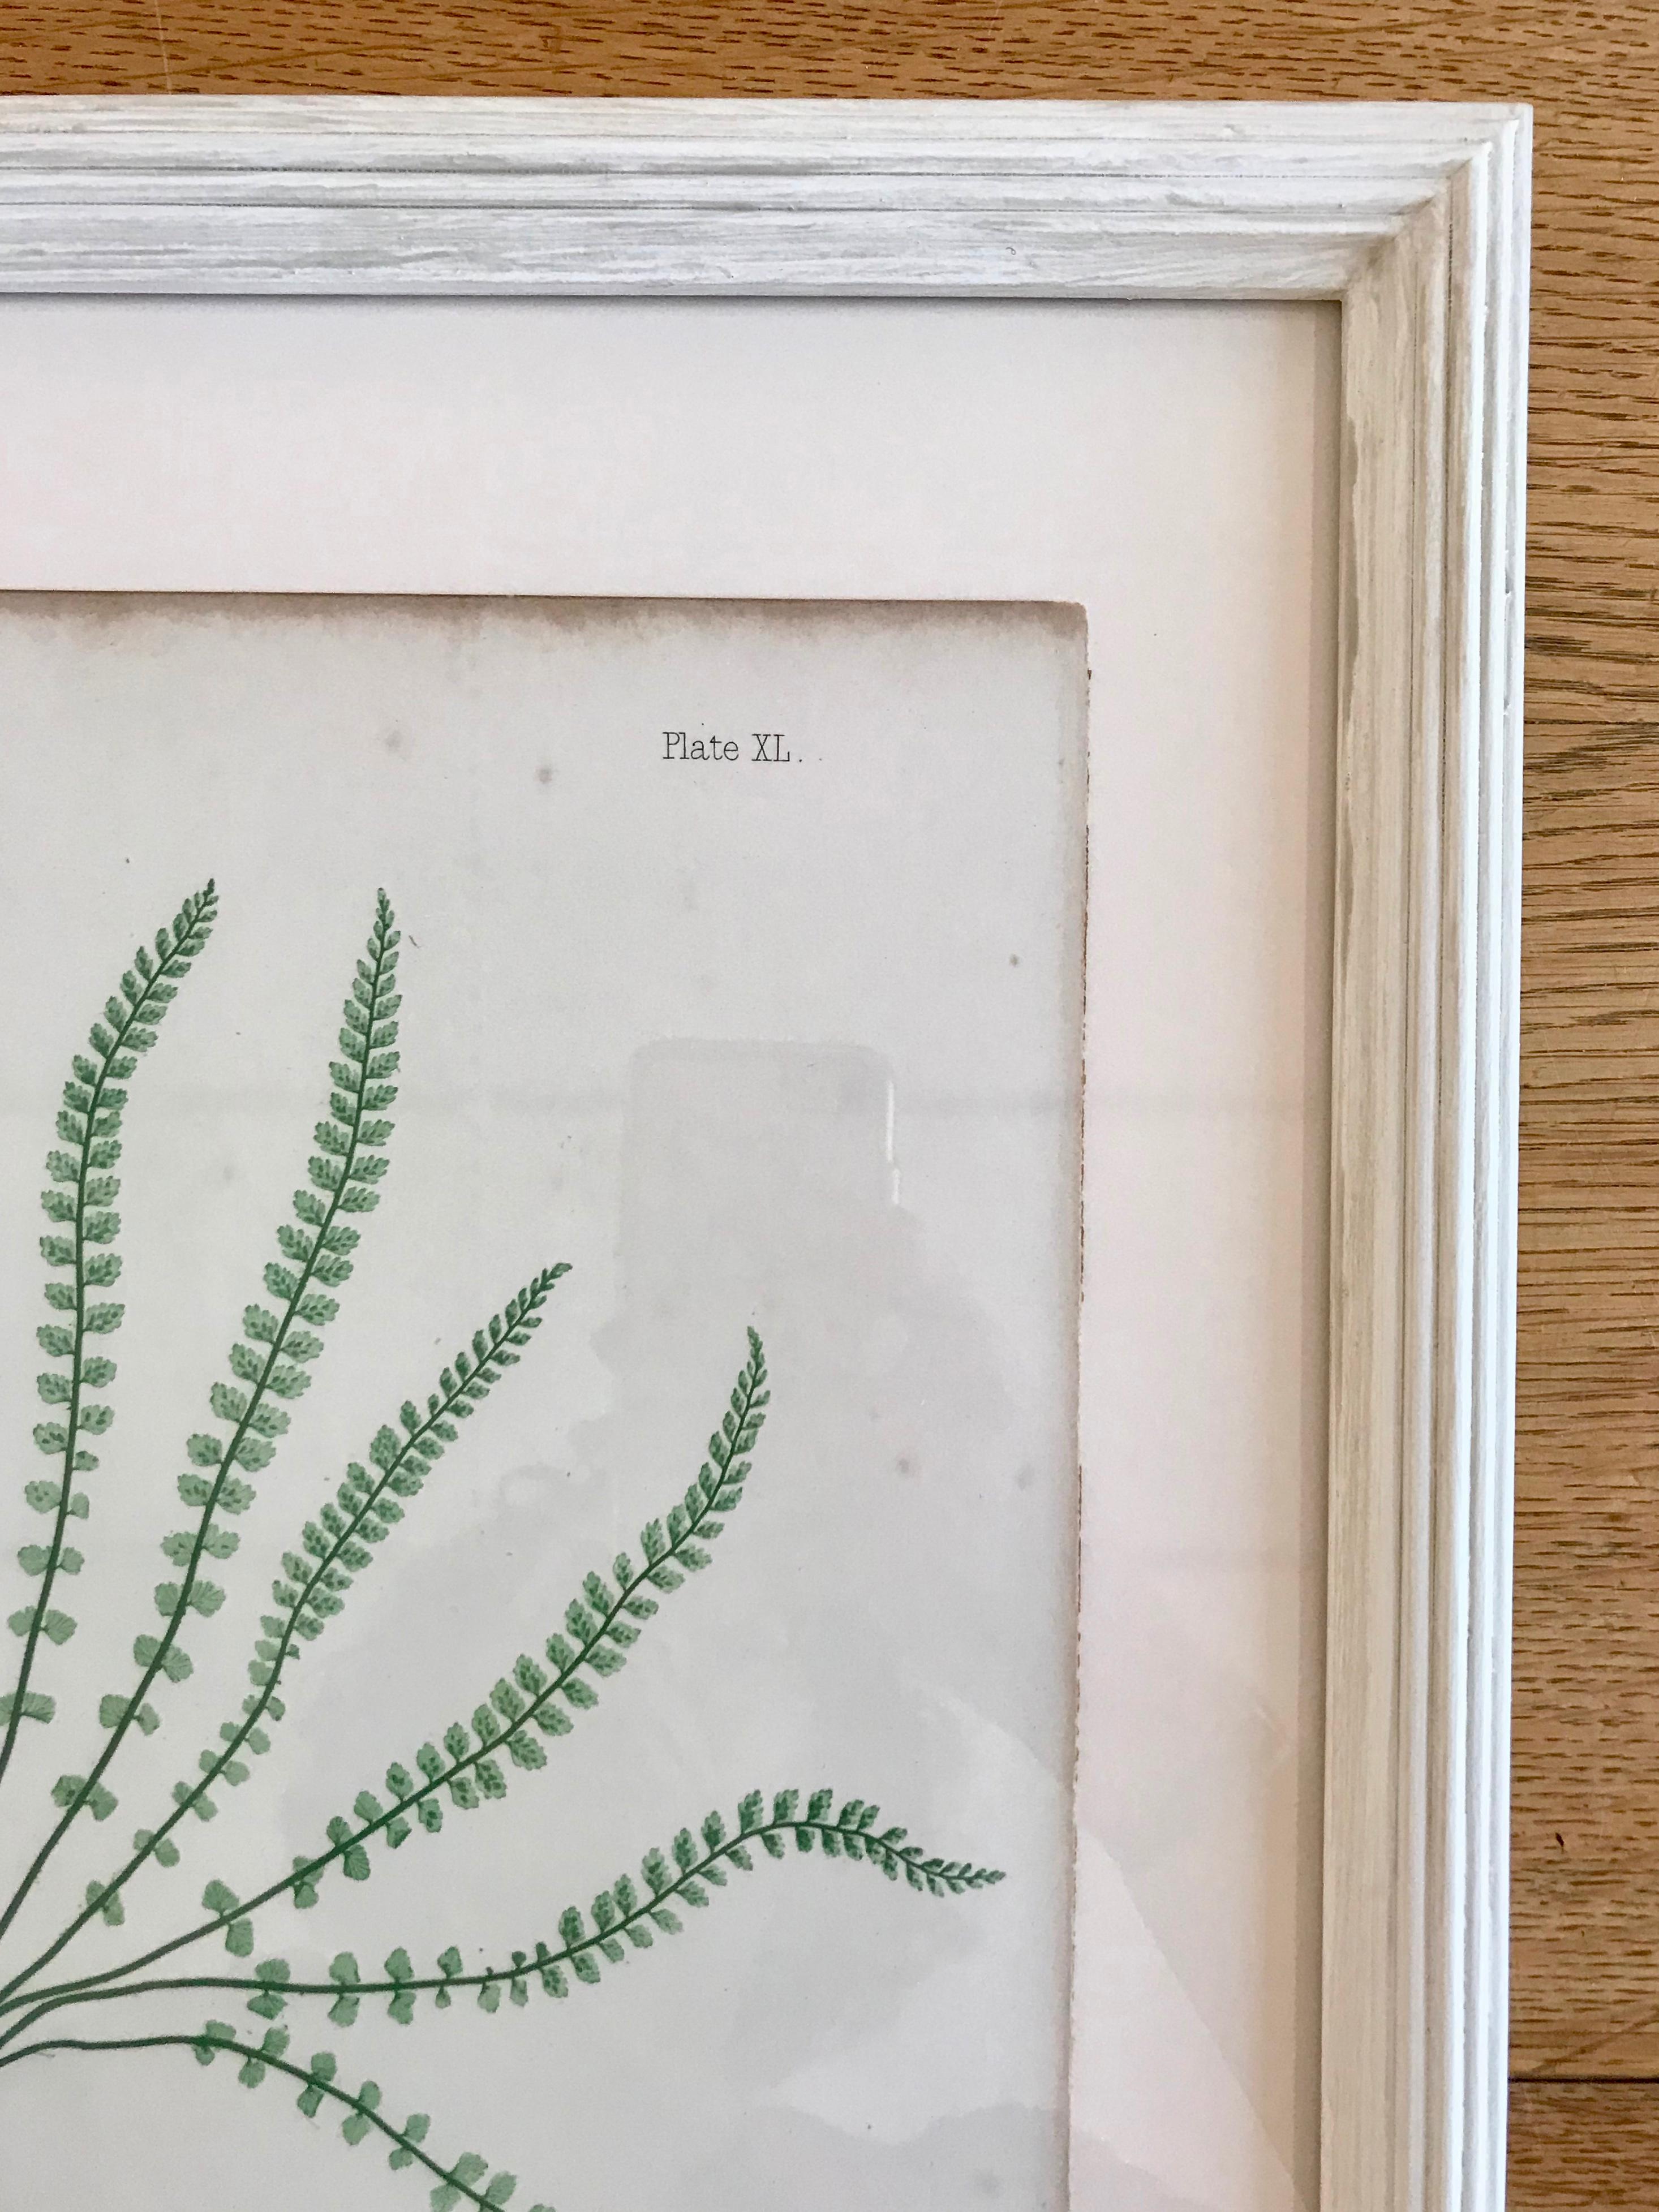 Rare process involving live specimens pressed into printing plates, circa 1855. Custom framing with conservation glass.

Plate XL.